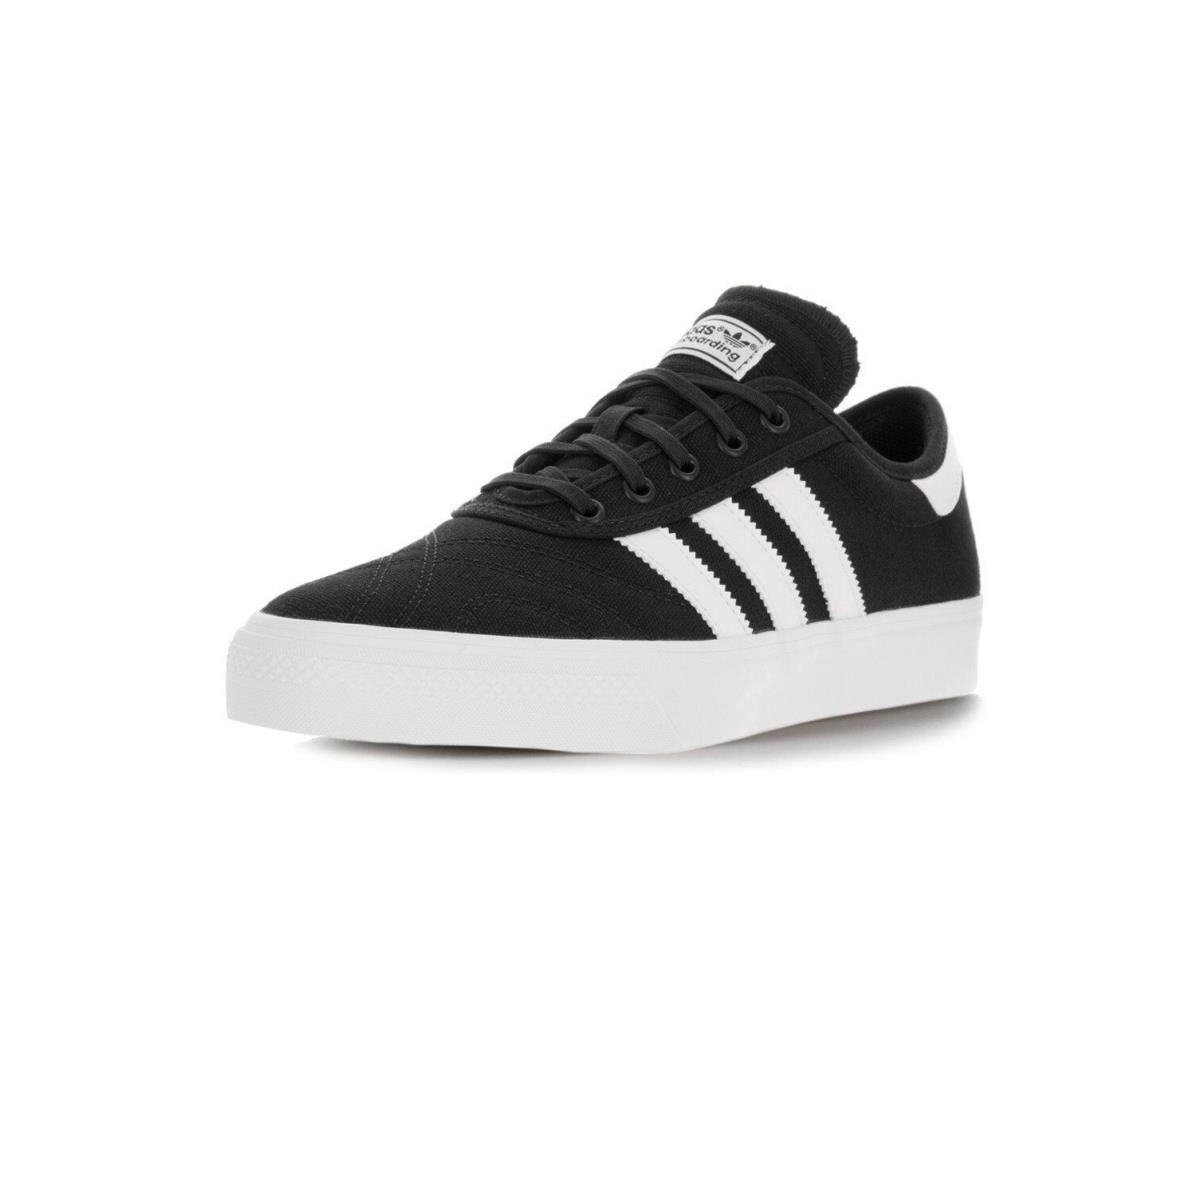 Adidas Adi-ease Premiere Black White Gum Skateboarding B42645 355 Men`s Shoes - Black